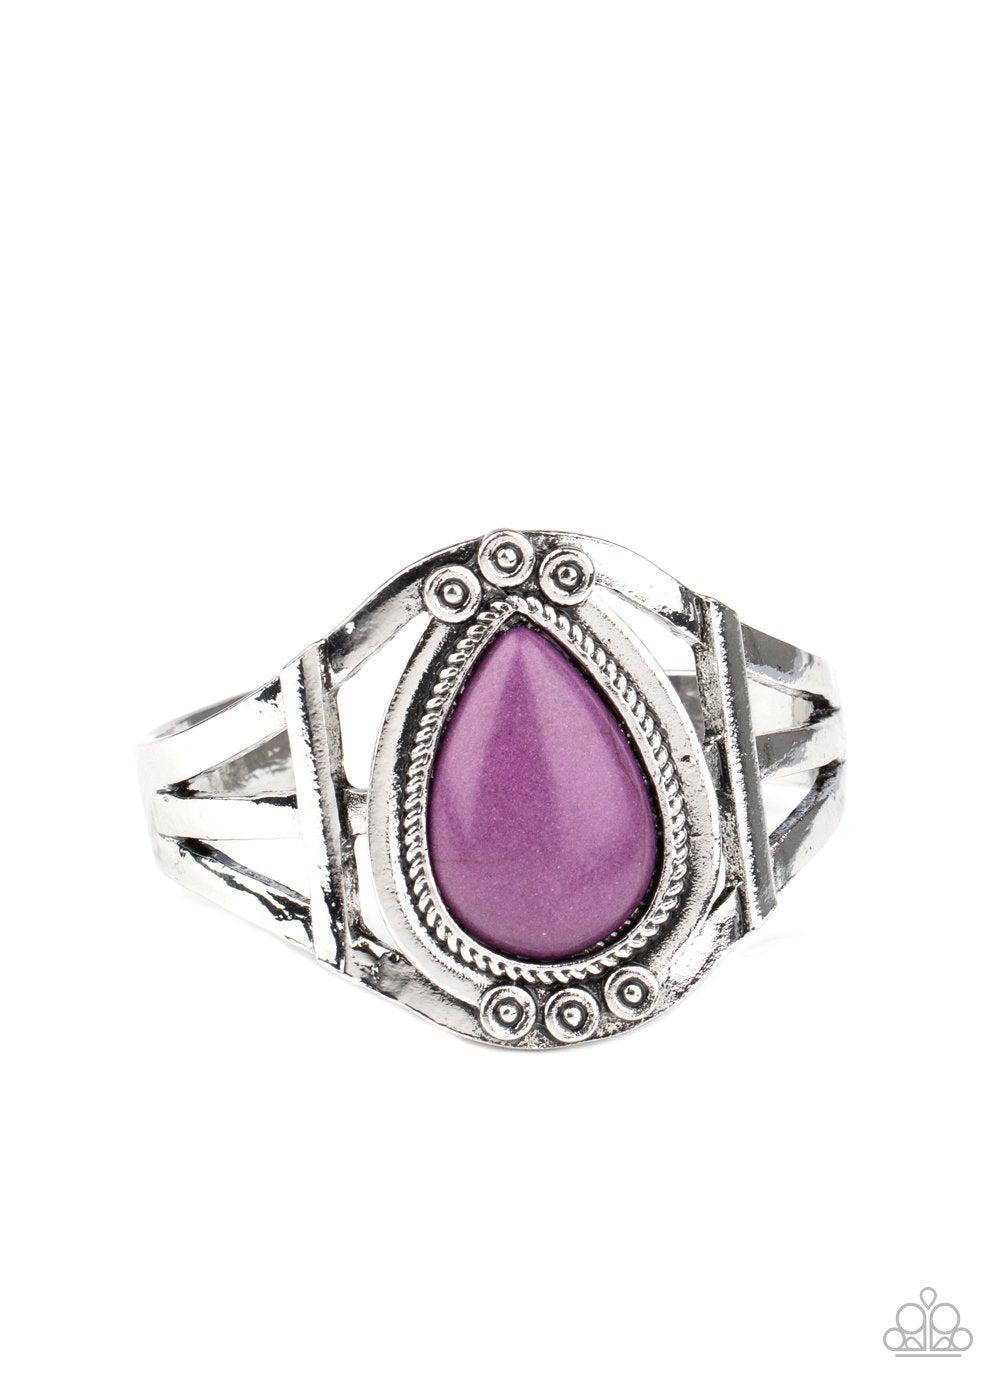 Sage Brush Beauty Purple Stone Cuff Bracelet - Paparazzi Accessories - lightbox -CarasShop.com - $5 Jewelry by Cara Jewels